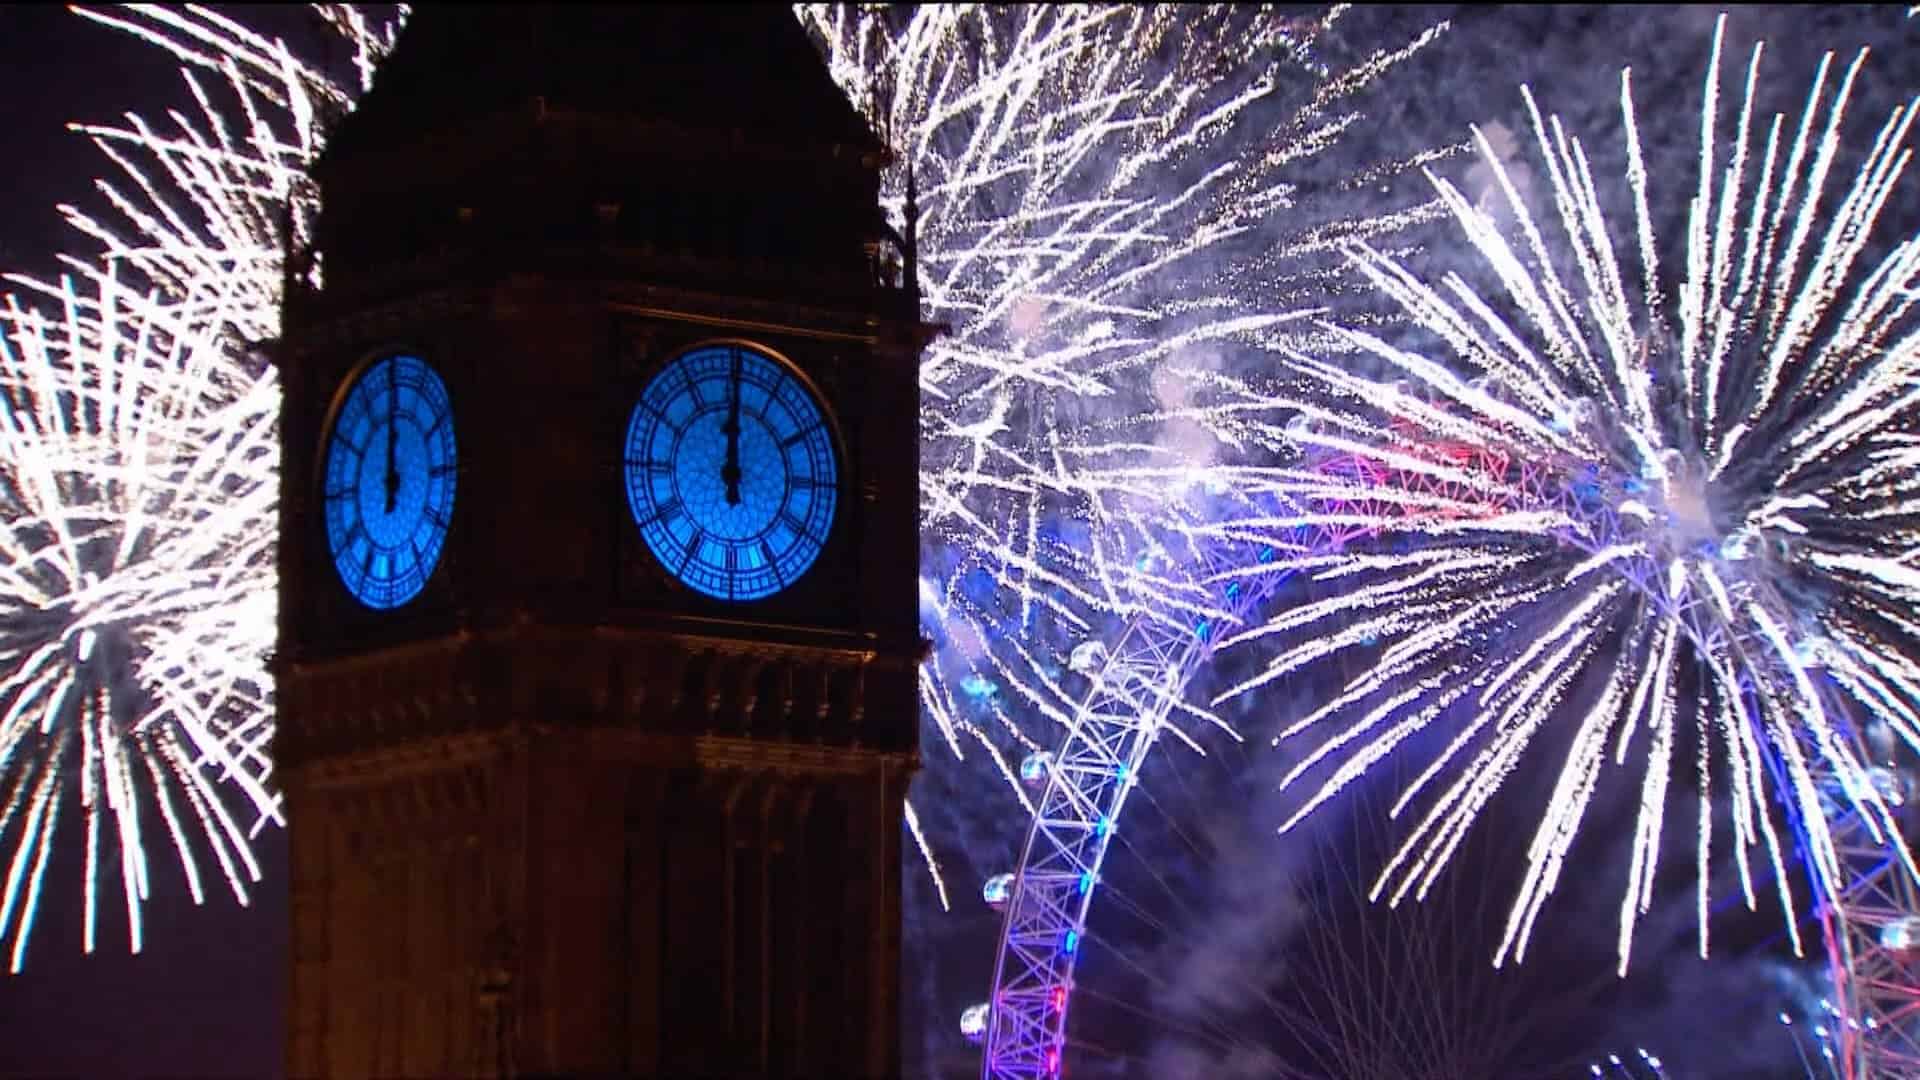 Full length New Years Fireworks 2016 in London